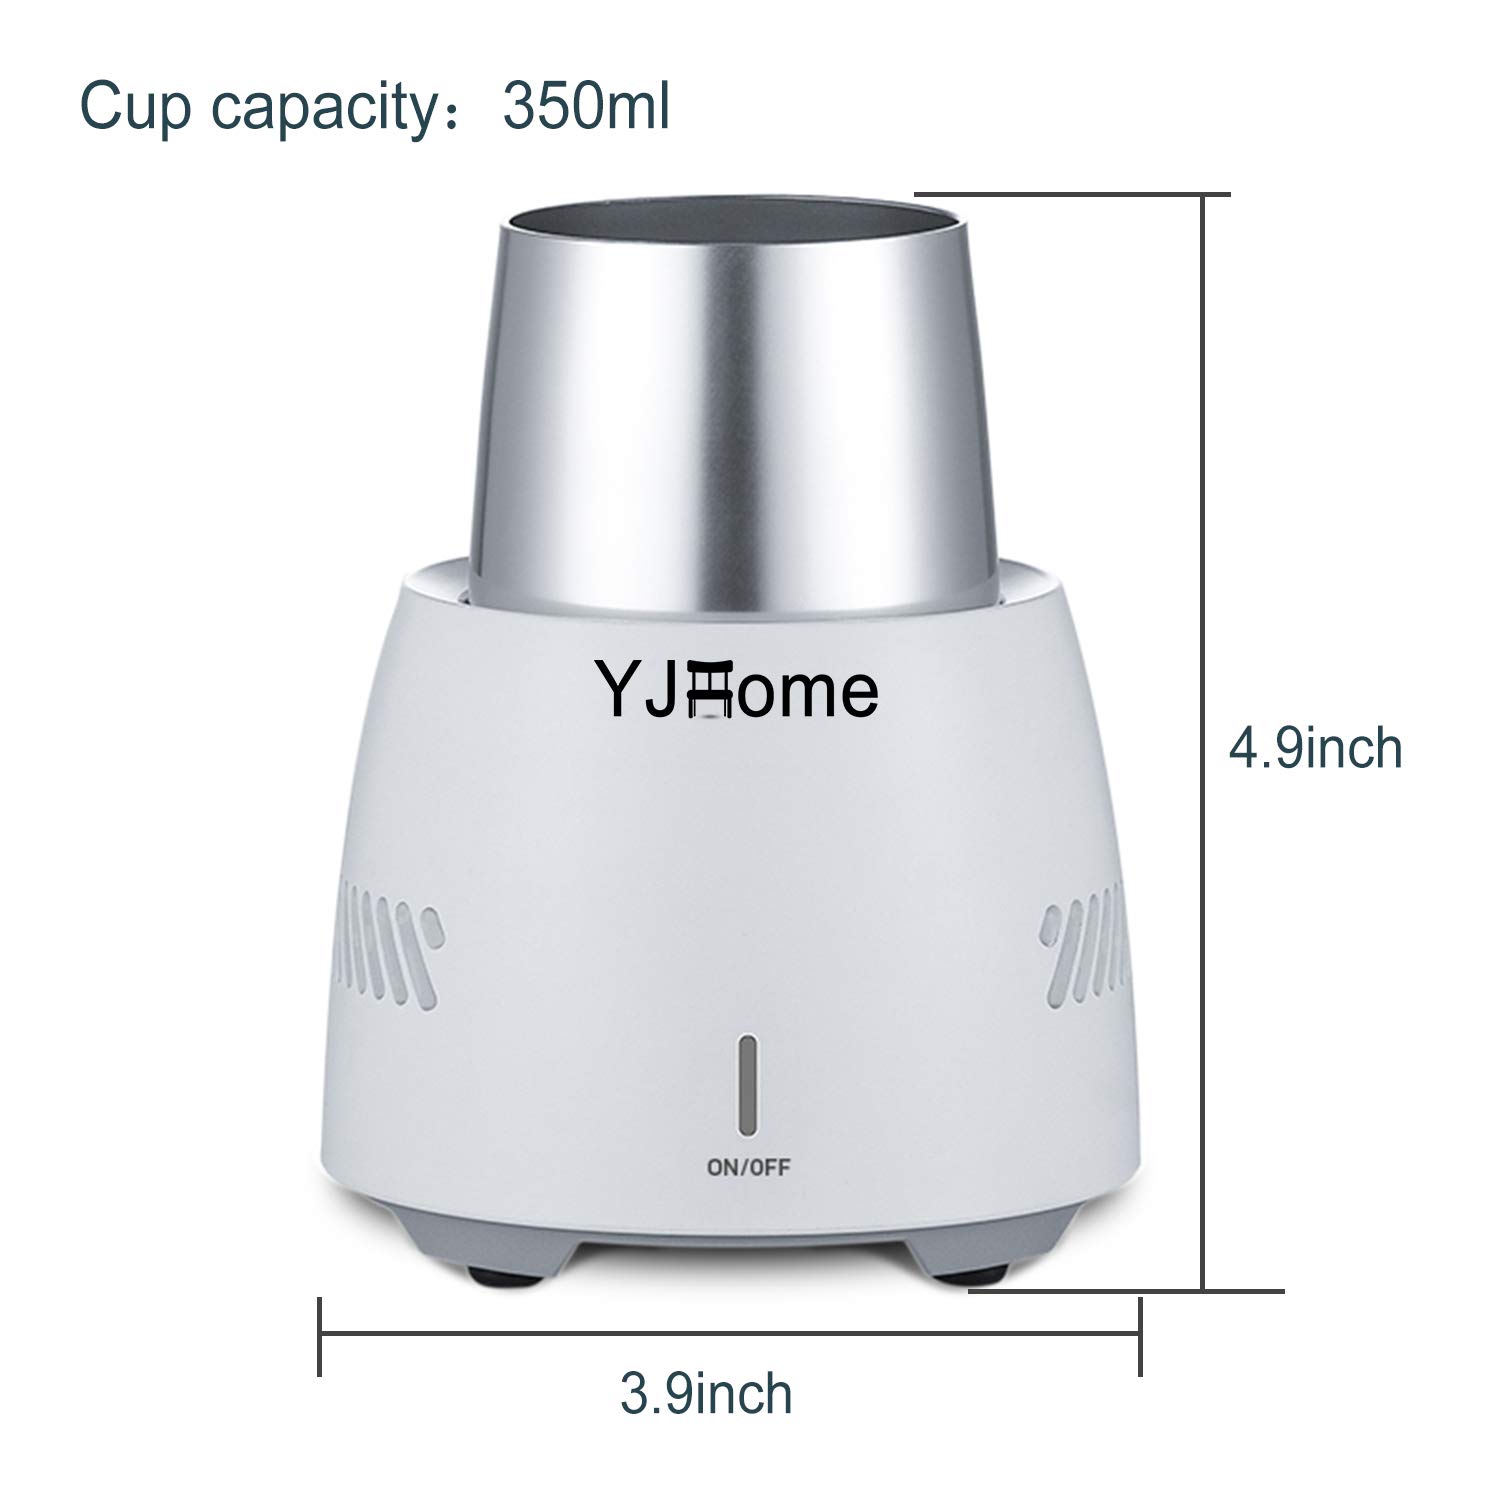 YJHome Cooler Cup Electric Cooling Cup Holder Plug in Mini Desk Refrigerator Portable Mug for Beverage Cola Beer Wine Drink Chiller 350ML, White